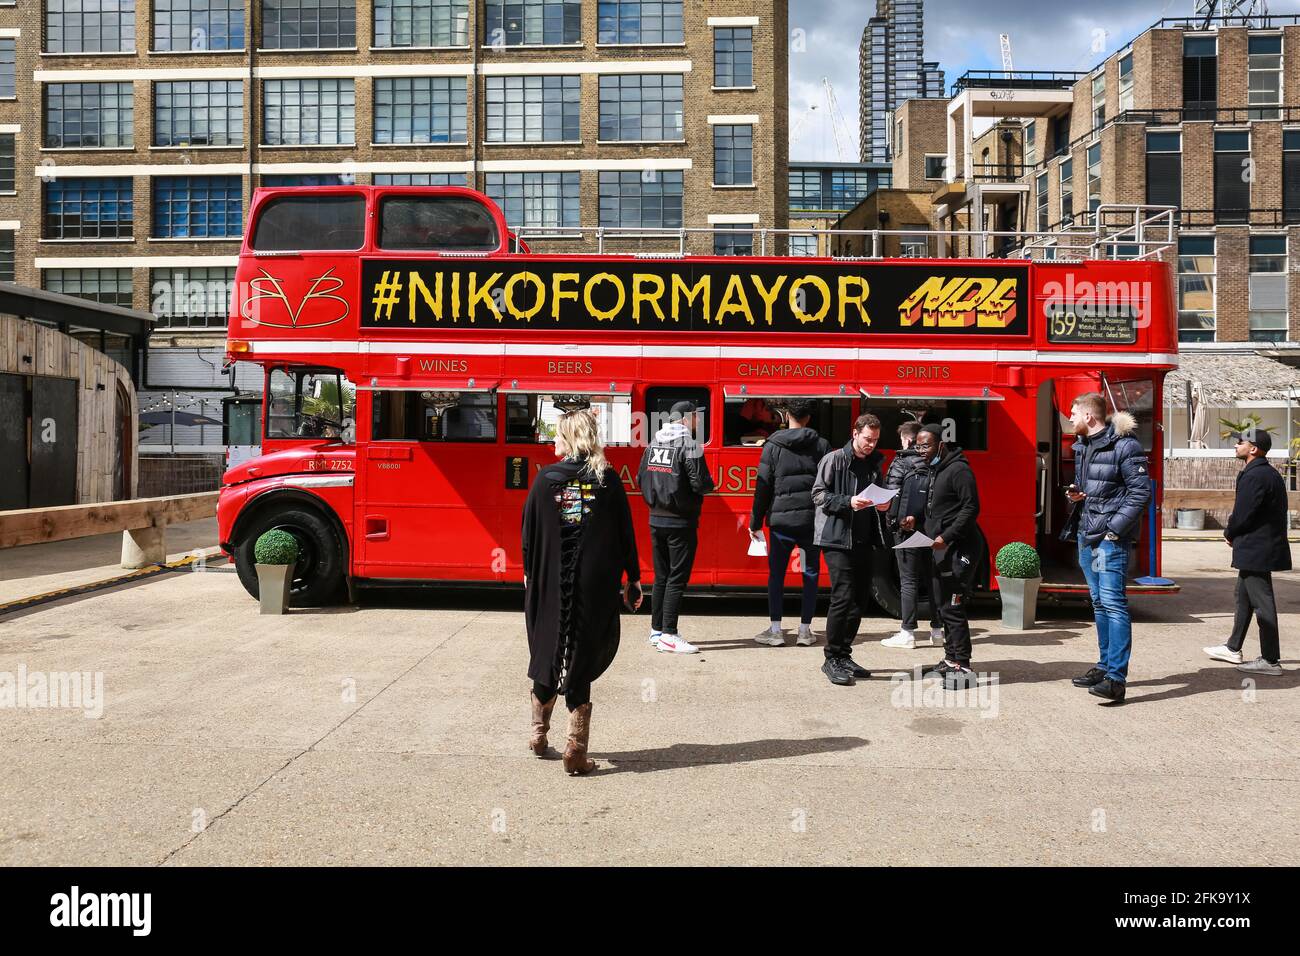 London, UK. 15 April 2021. Niko for mayor bus on Brick Lane. Niko Omilana  is a candidate for Mayor of London. Credit: Waldemar Sikora Stock Photo -  Alamy